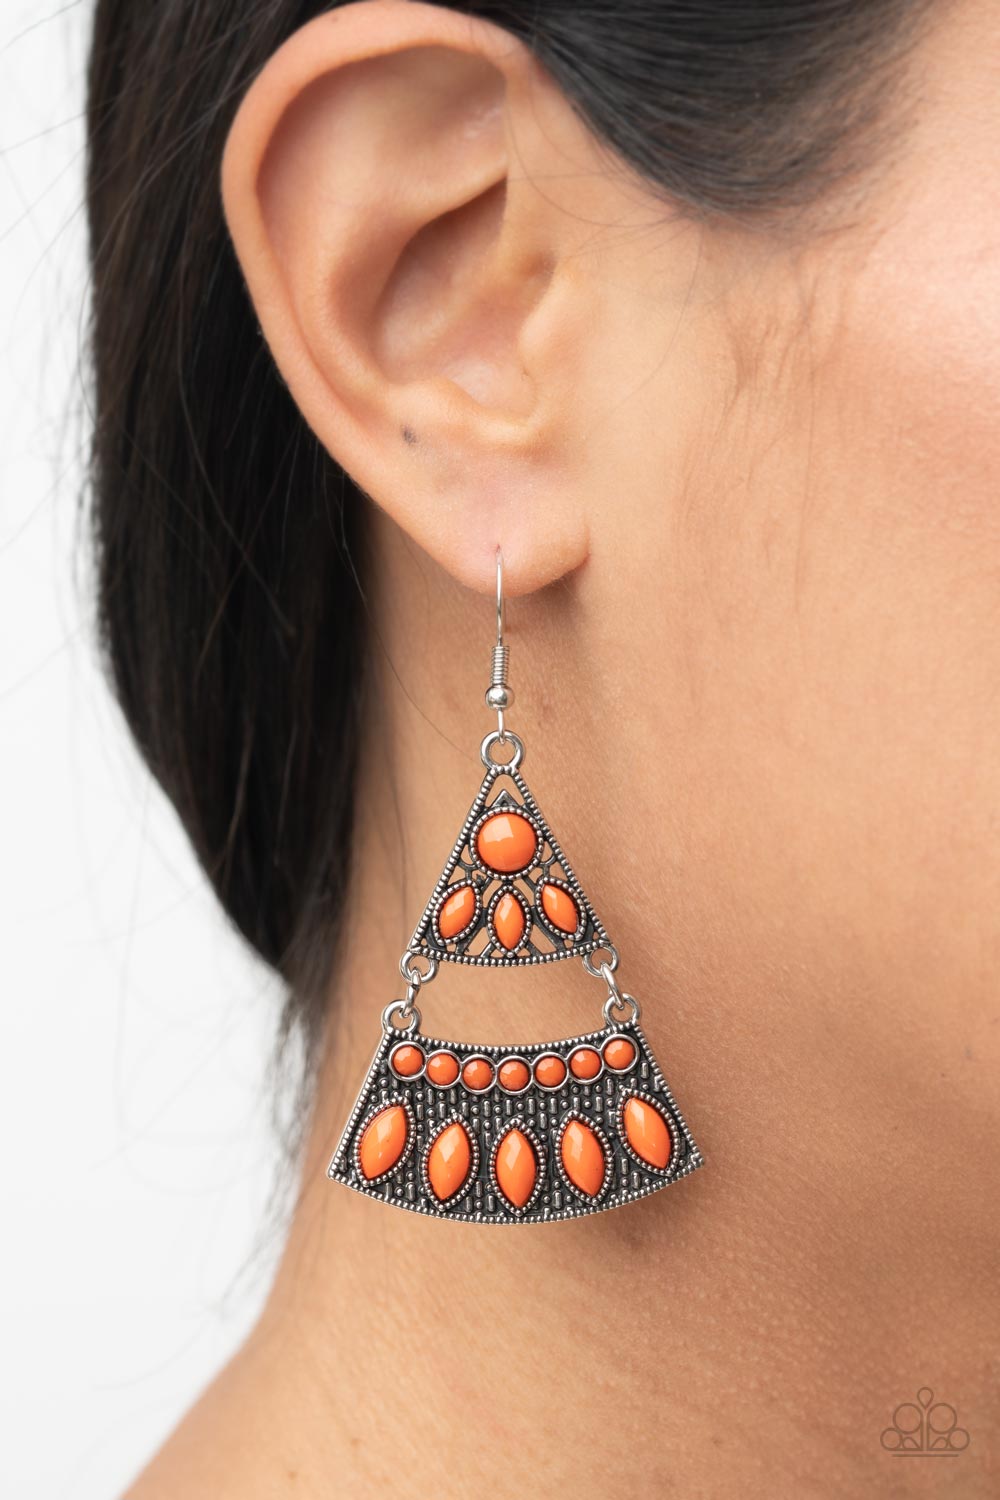 Desert Fiesta - Orange earrings